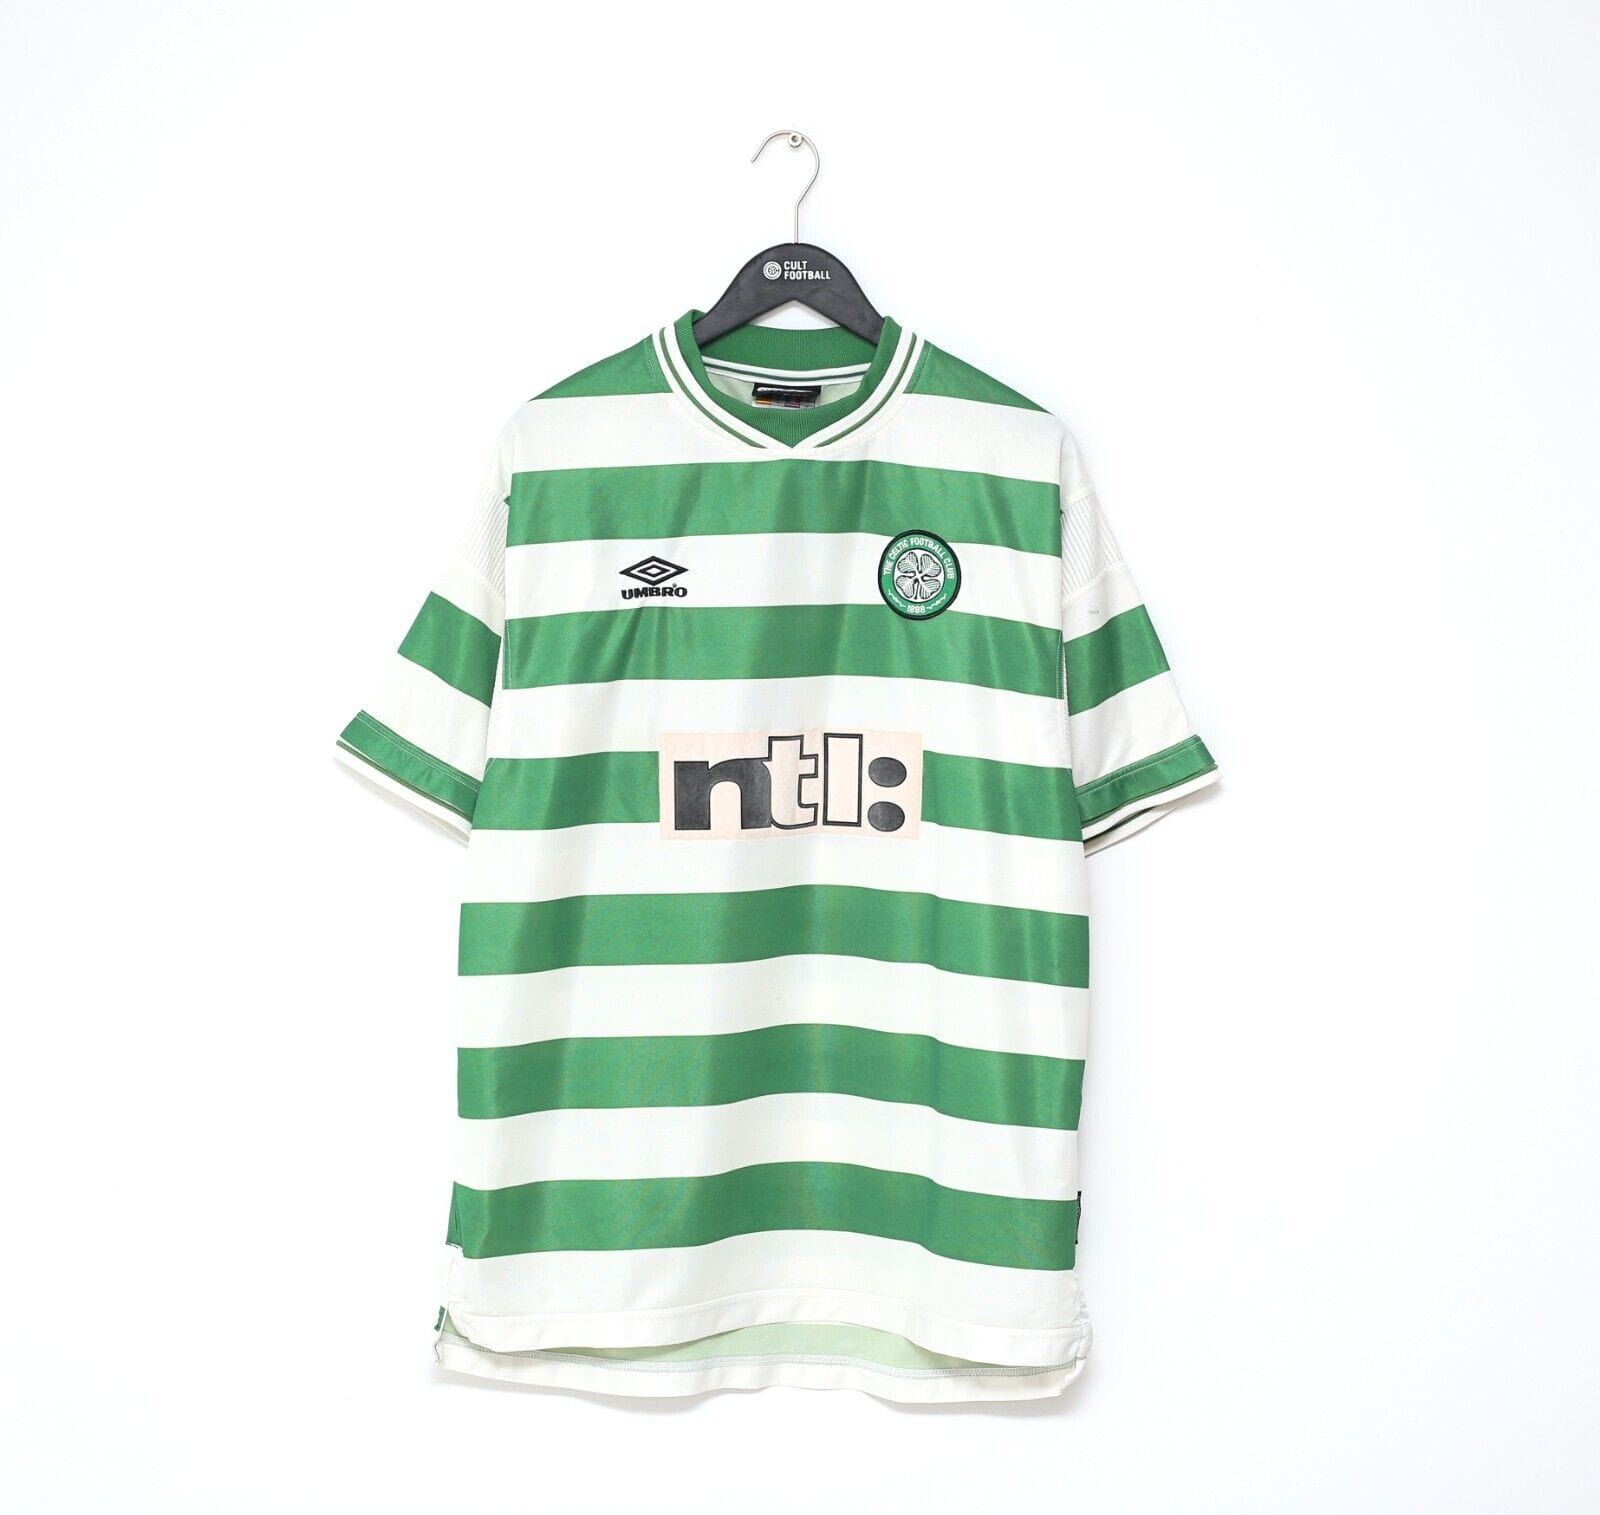 Celtic Home football shirt 2001 - 2003. Sponsored by NTL